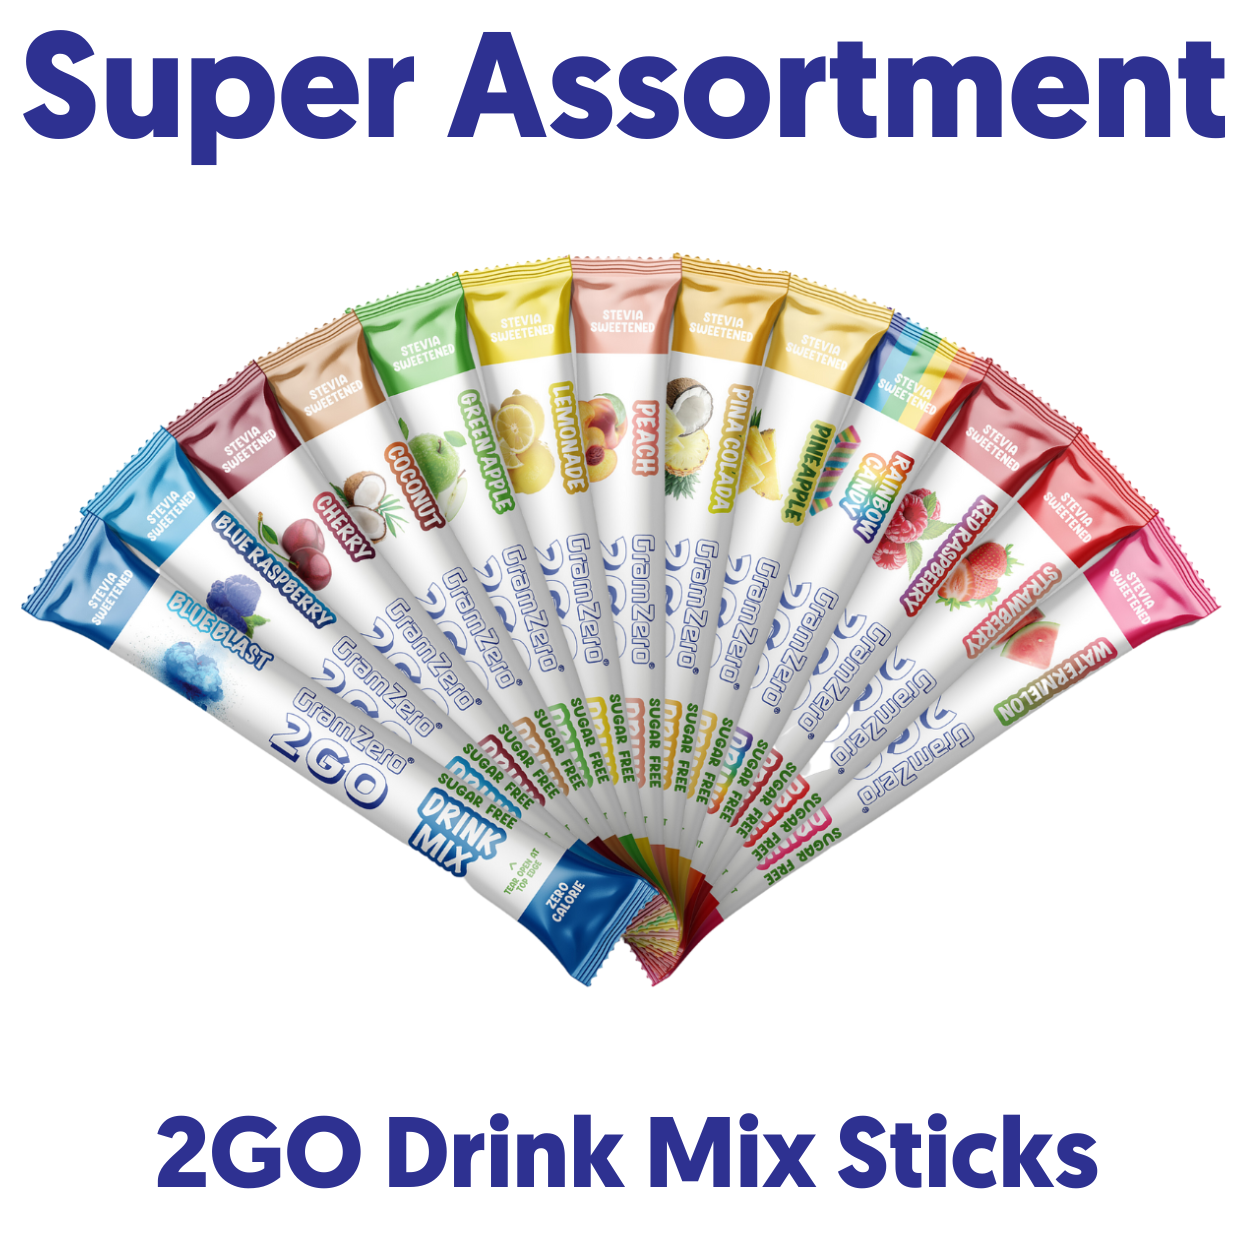 SUPER ASSORTMENT 2GO Sugar Free Drink Mix Sticks: 13 Pack ~ Great for Loaded Tea Kits